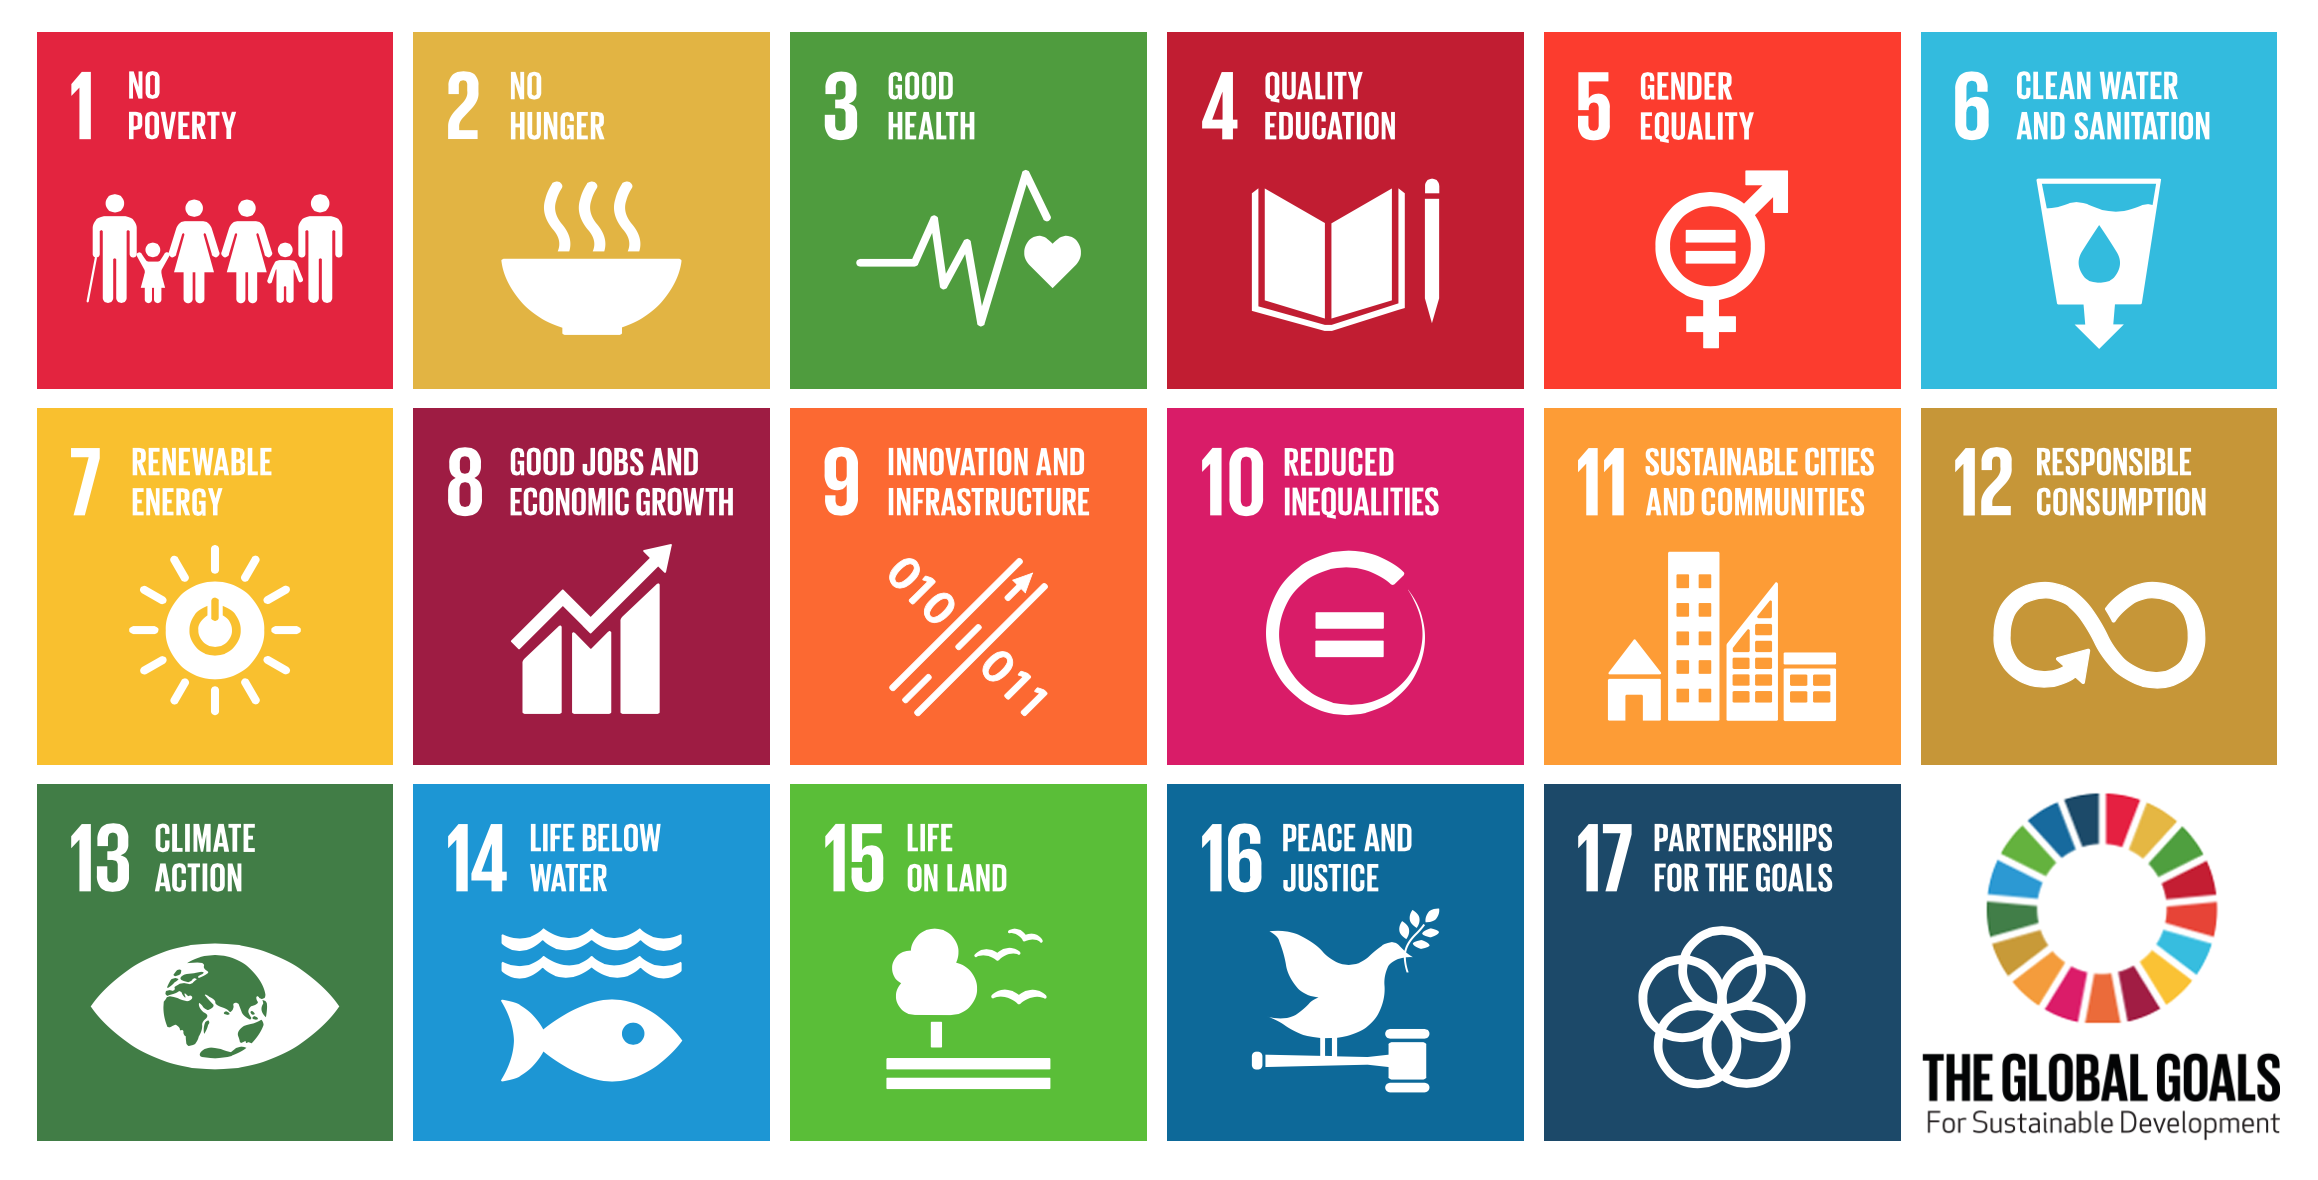 Sustainable Development Goals 2030 Chart (SDGs 2030)